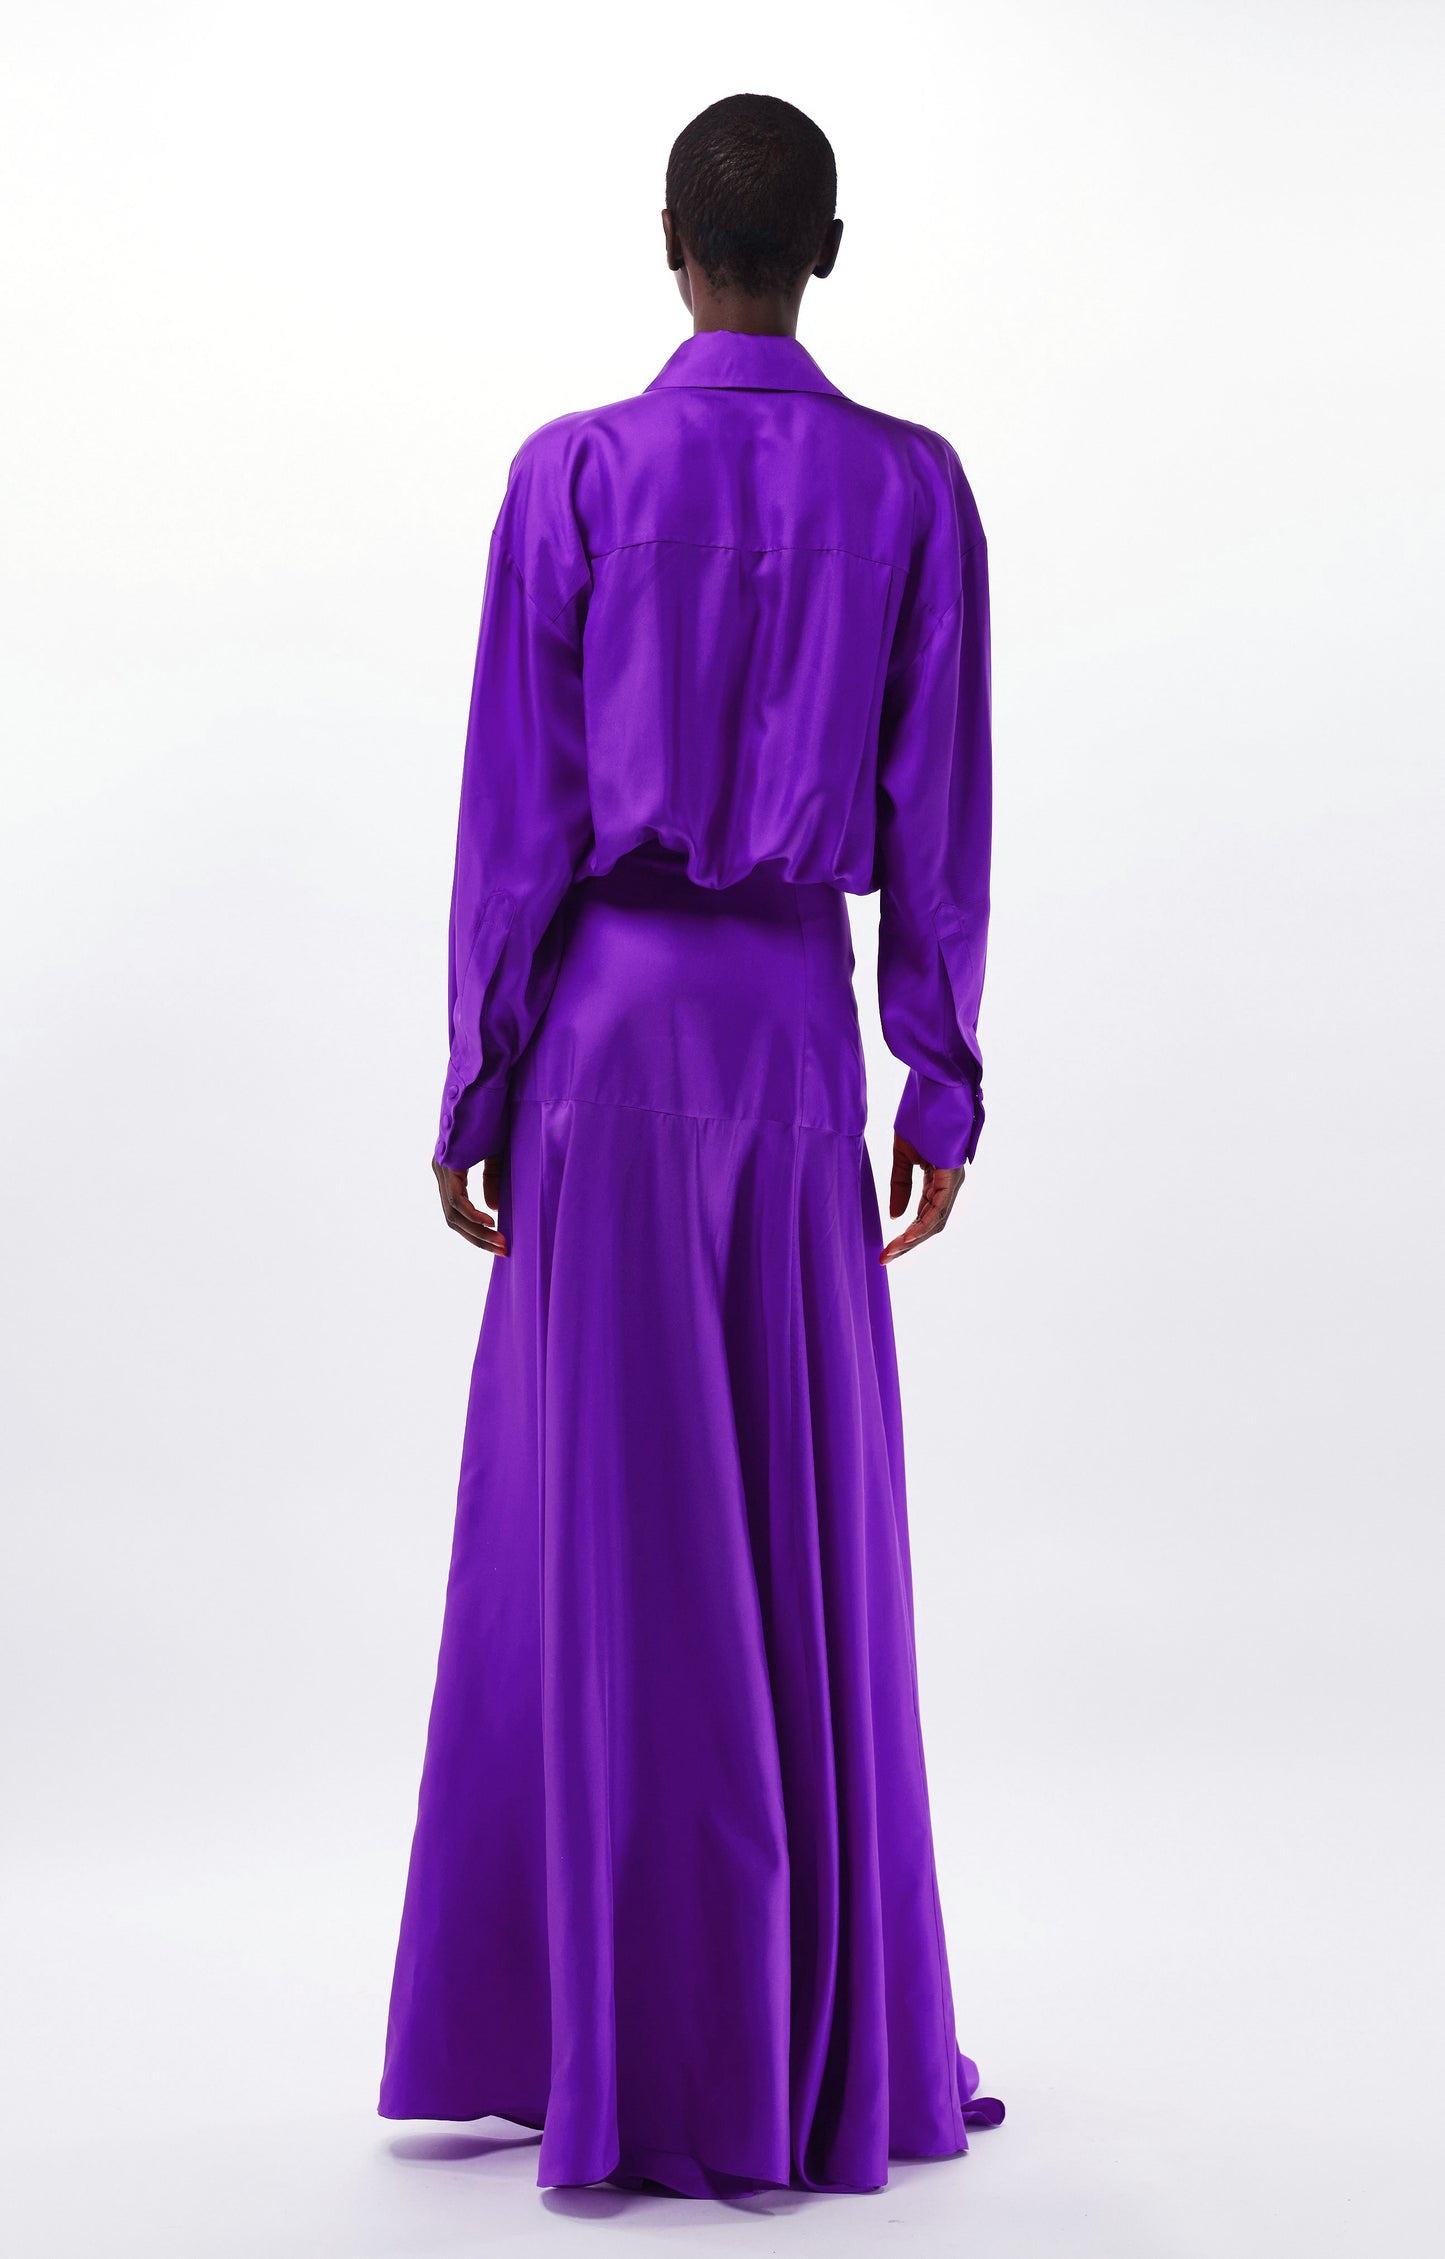 Sean Dress - Premium  from Marina St Barth - Just $1465! Shop now at Marina St Barth